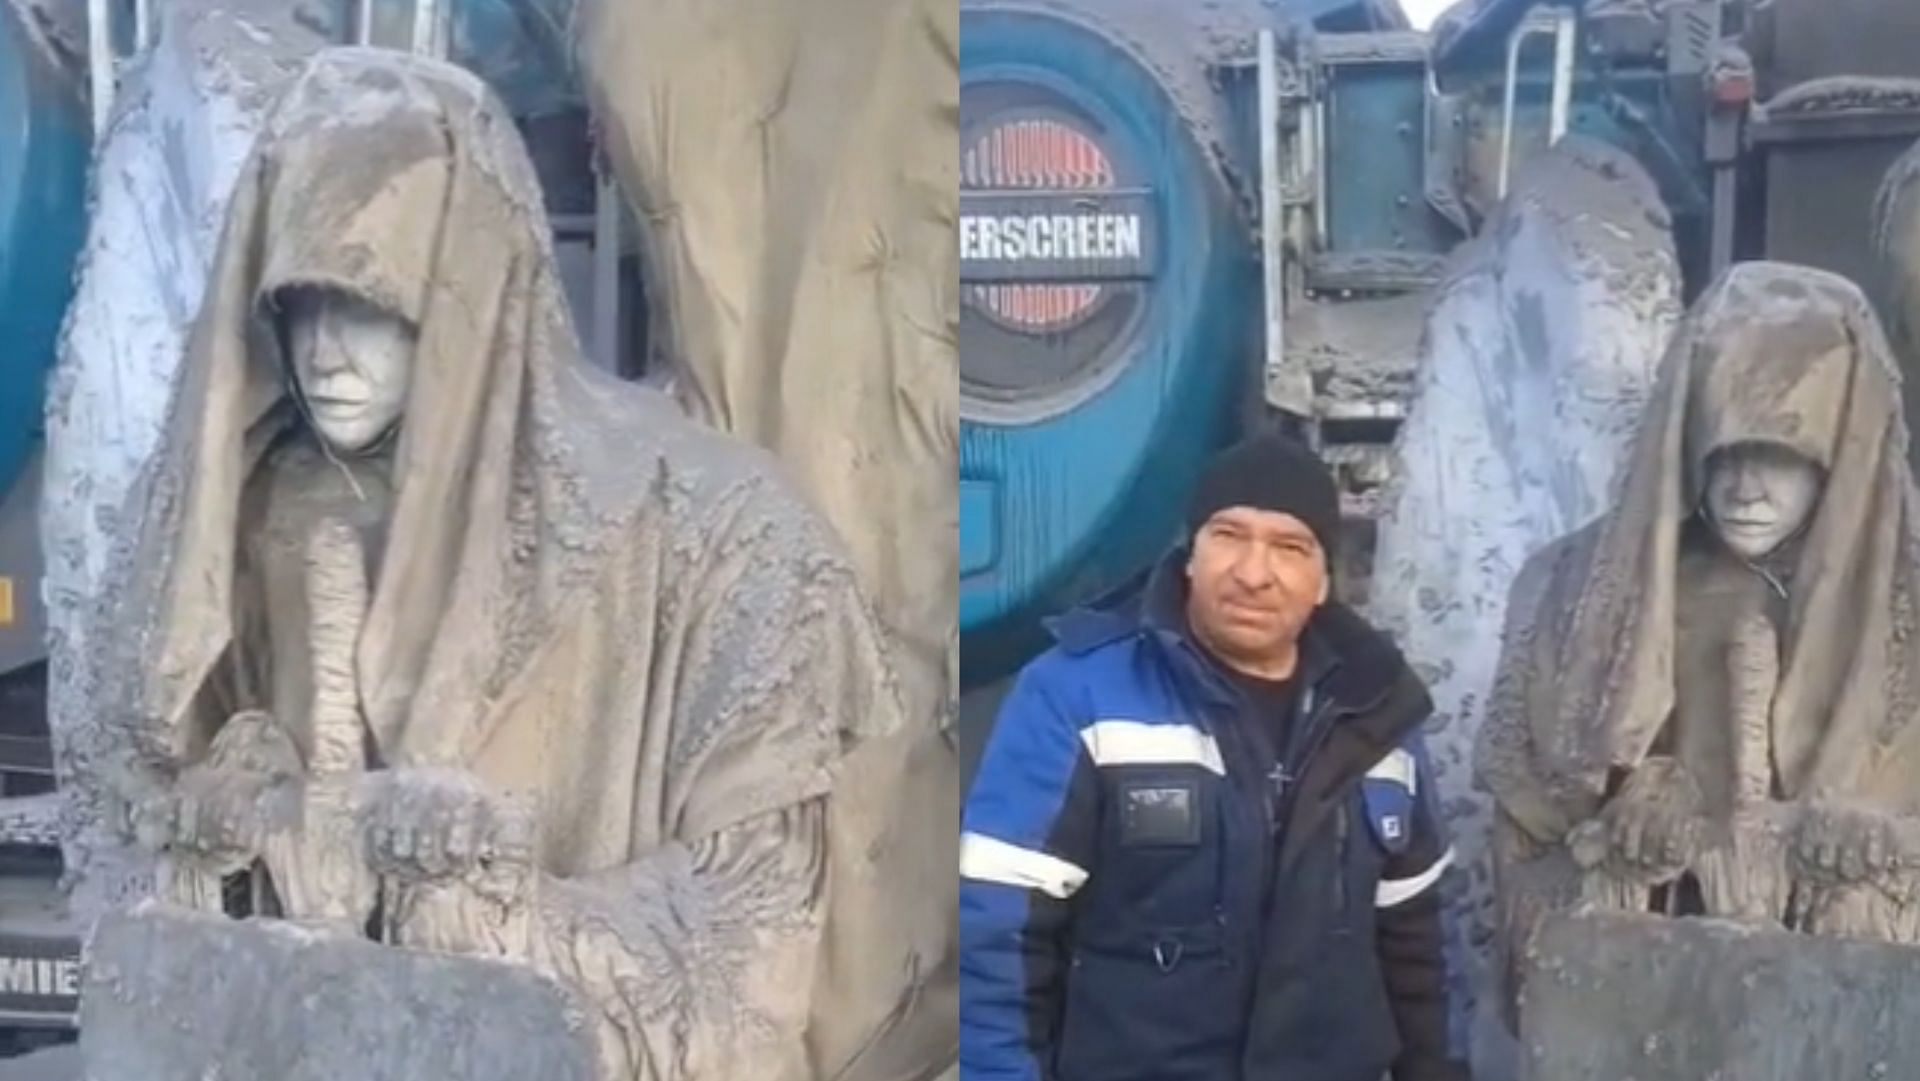 Fallen angel statue in russia found